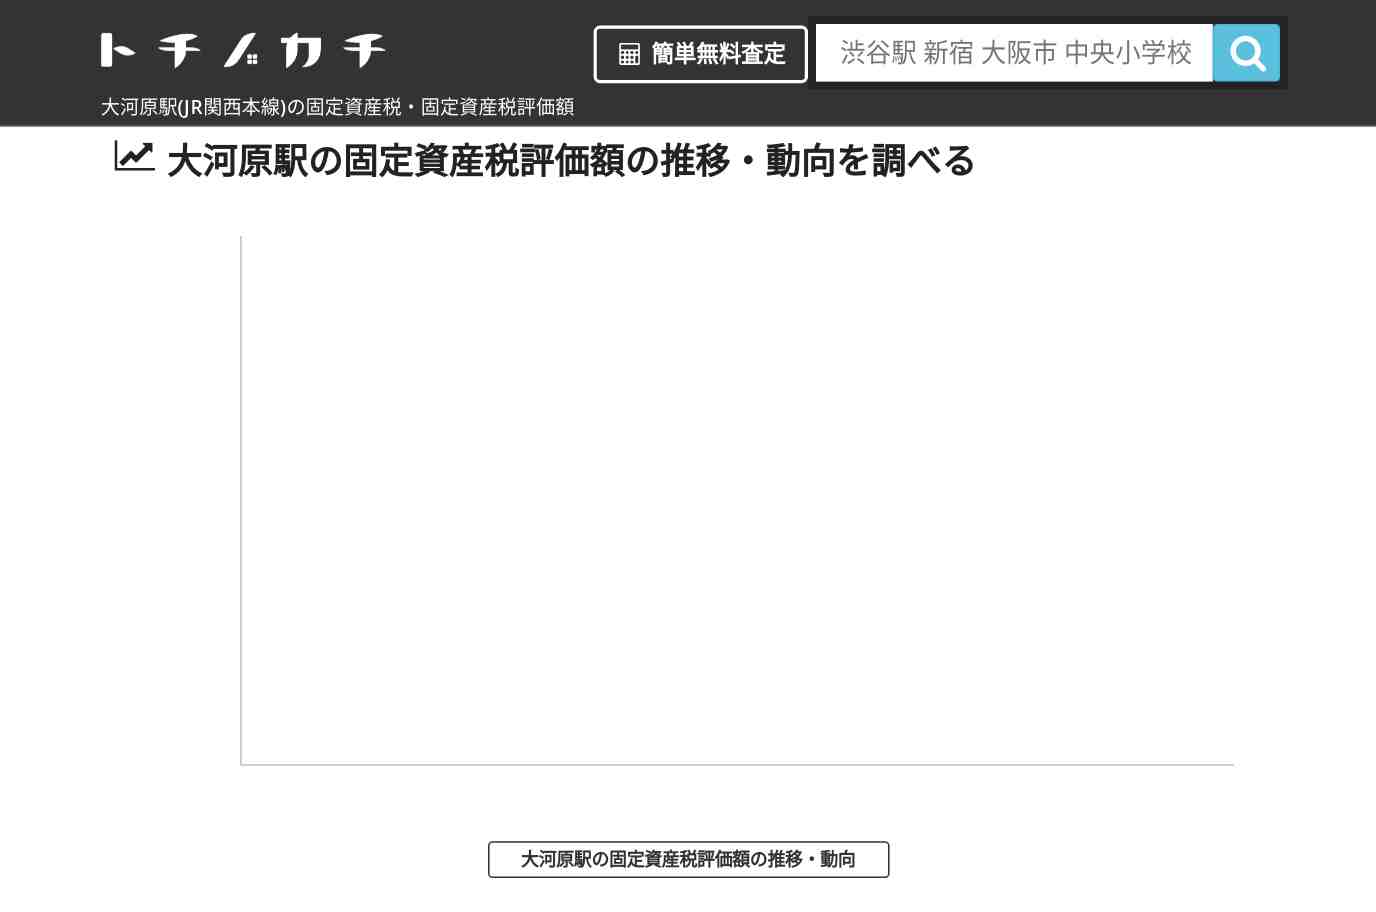 大河原駅(JR関西本線)の固定資産税・固定資産税評価額 | トチノカチ